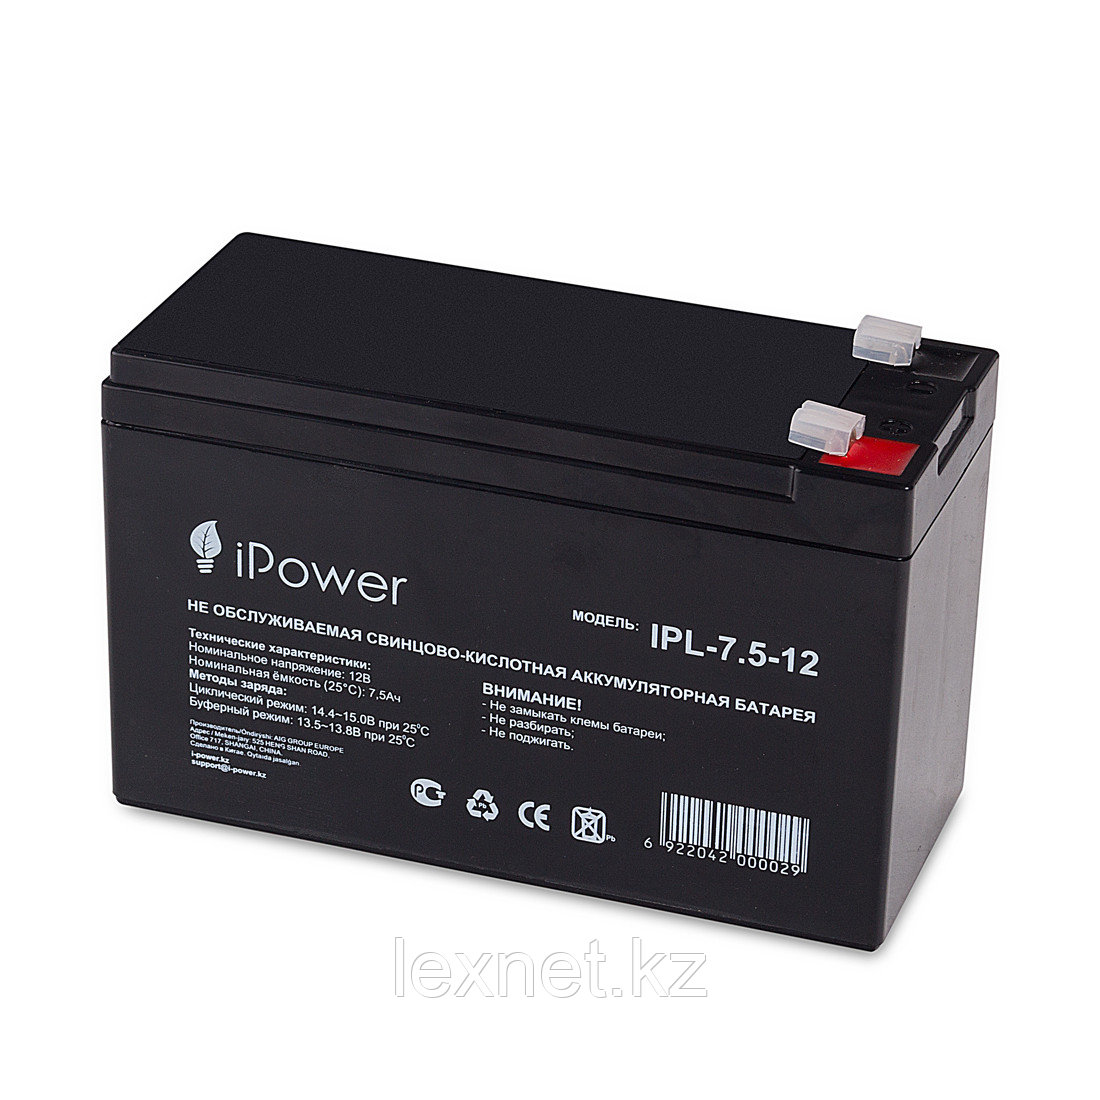 Батарея, IPower, IPL7.5-12/L, Свинцово-кислотная 12В 7.5 Ач, Размер в мм.: 95*151*65